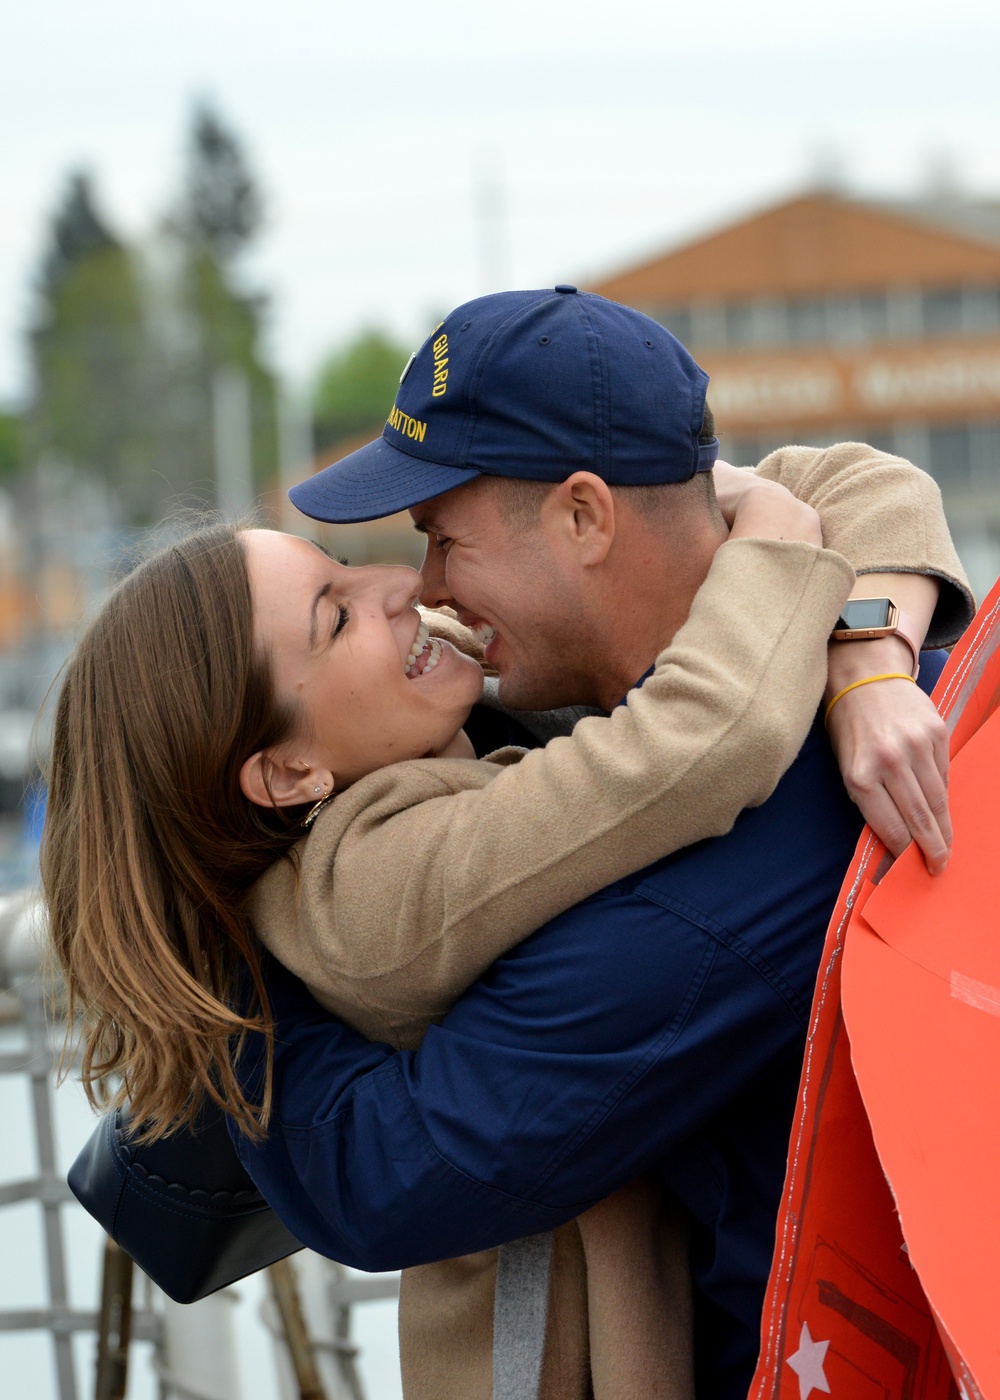 Coast Guard Cutter Stratton returns home following 60-day, multi-mission patrol